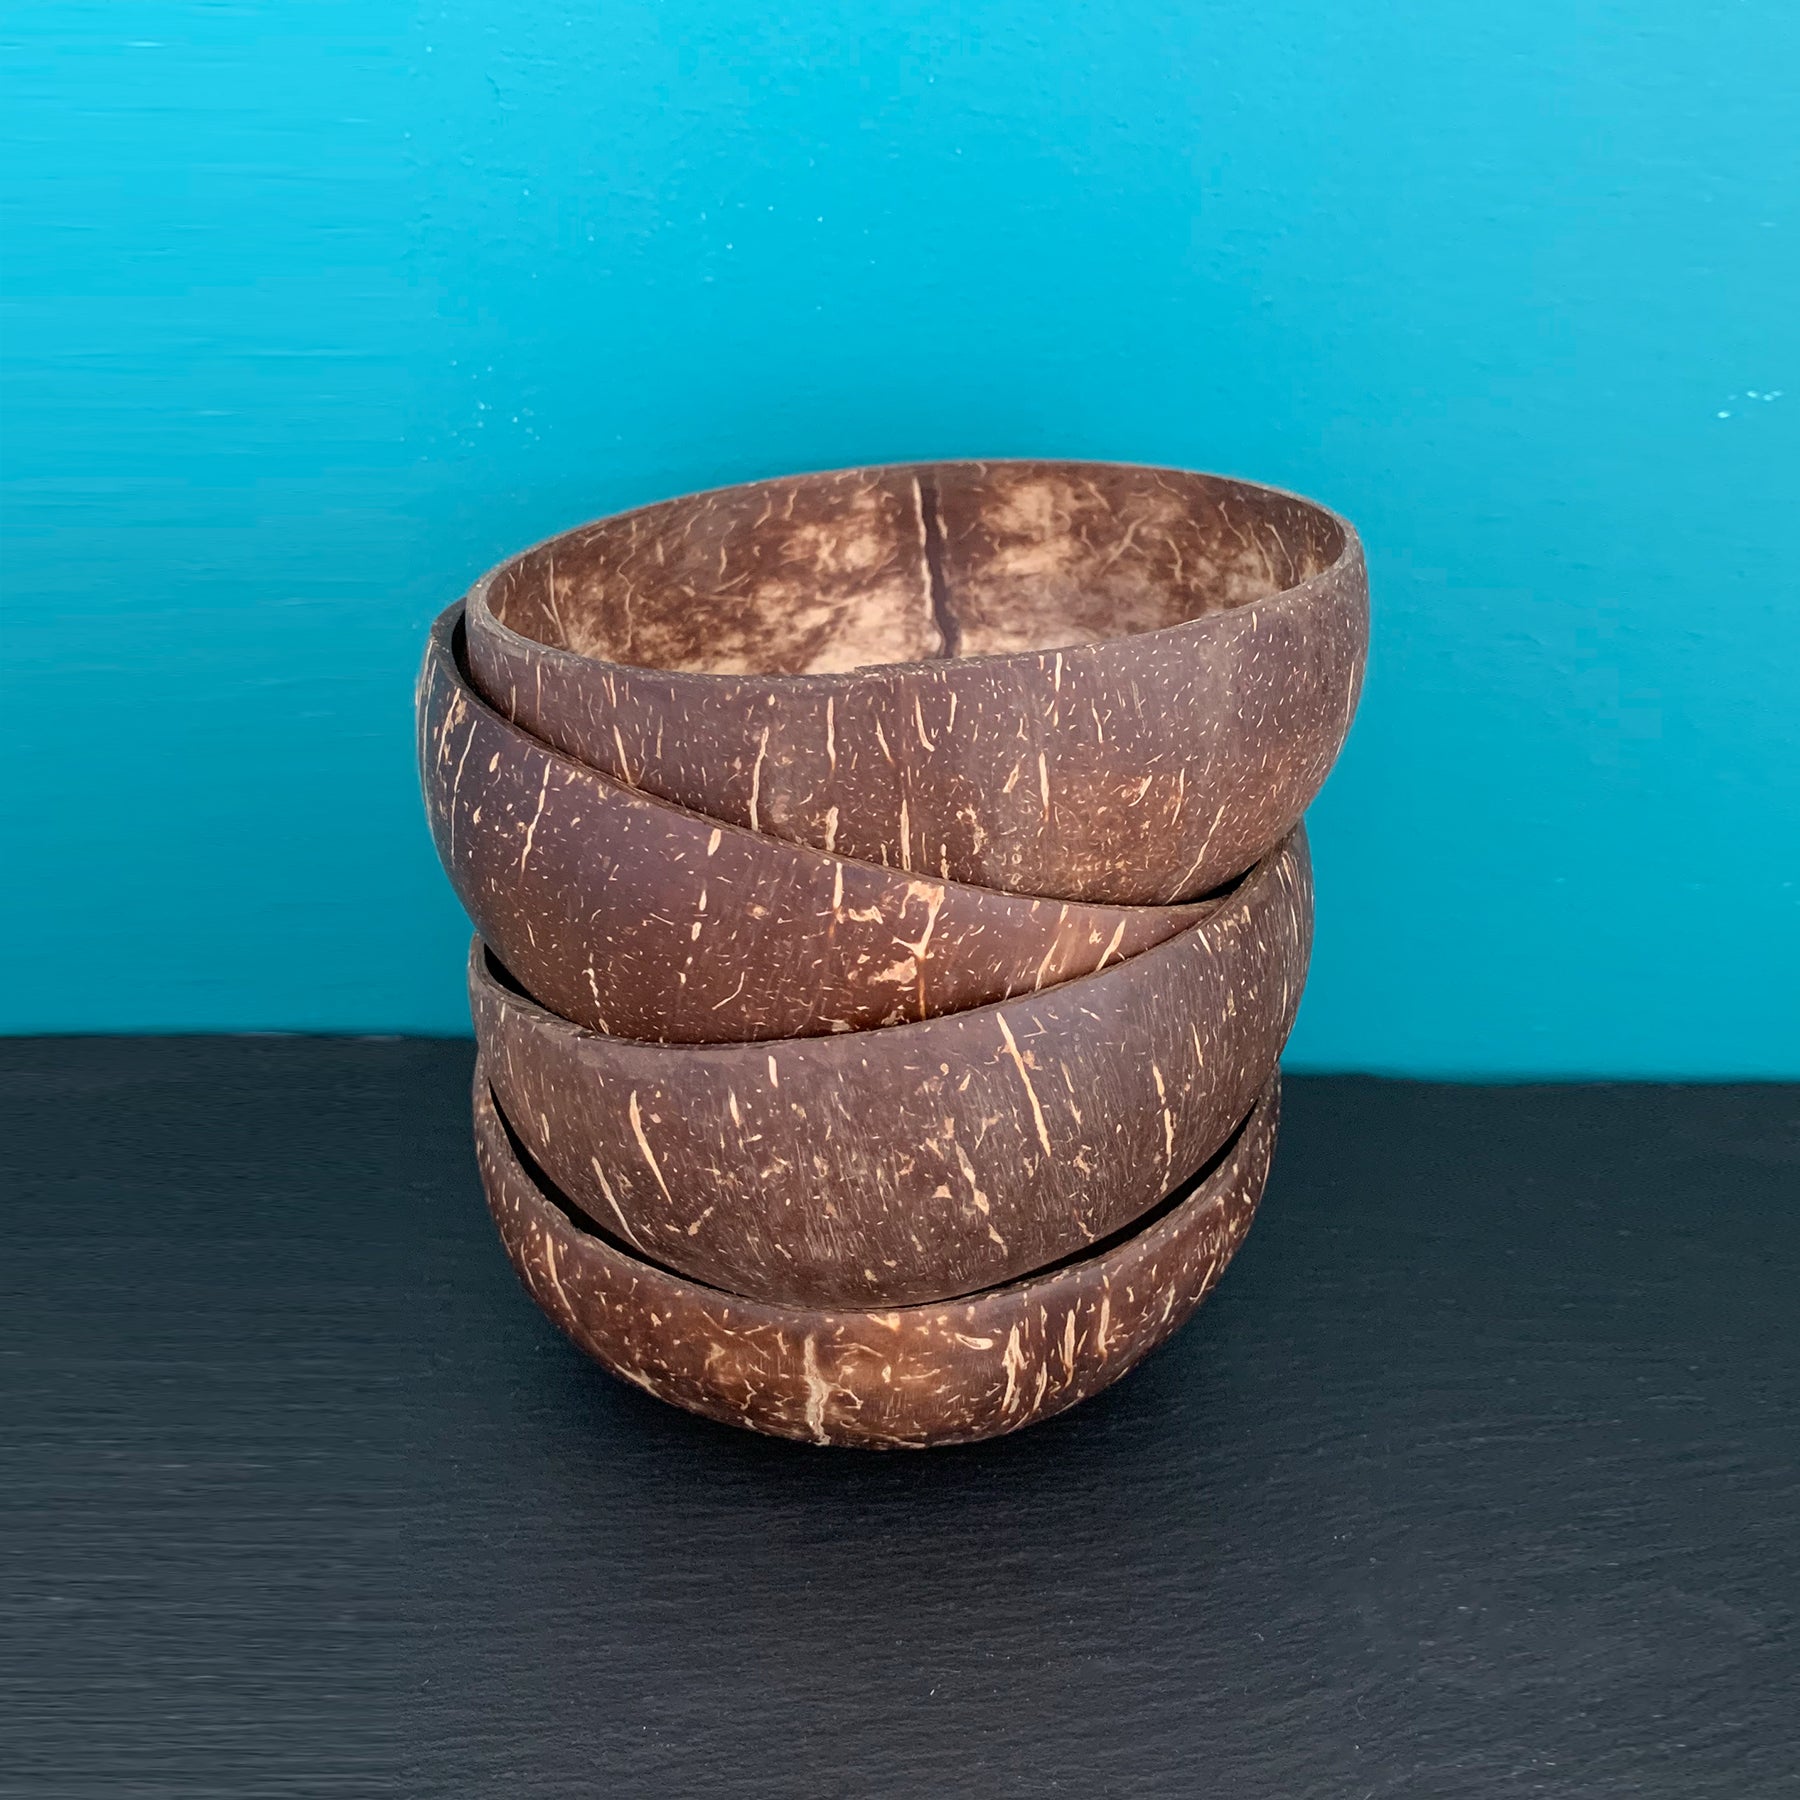 Coconut Bowls Set of 4 - Pasoluna